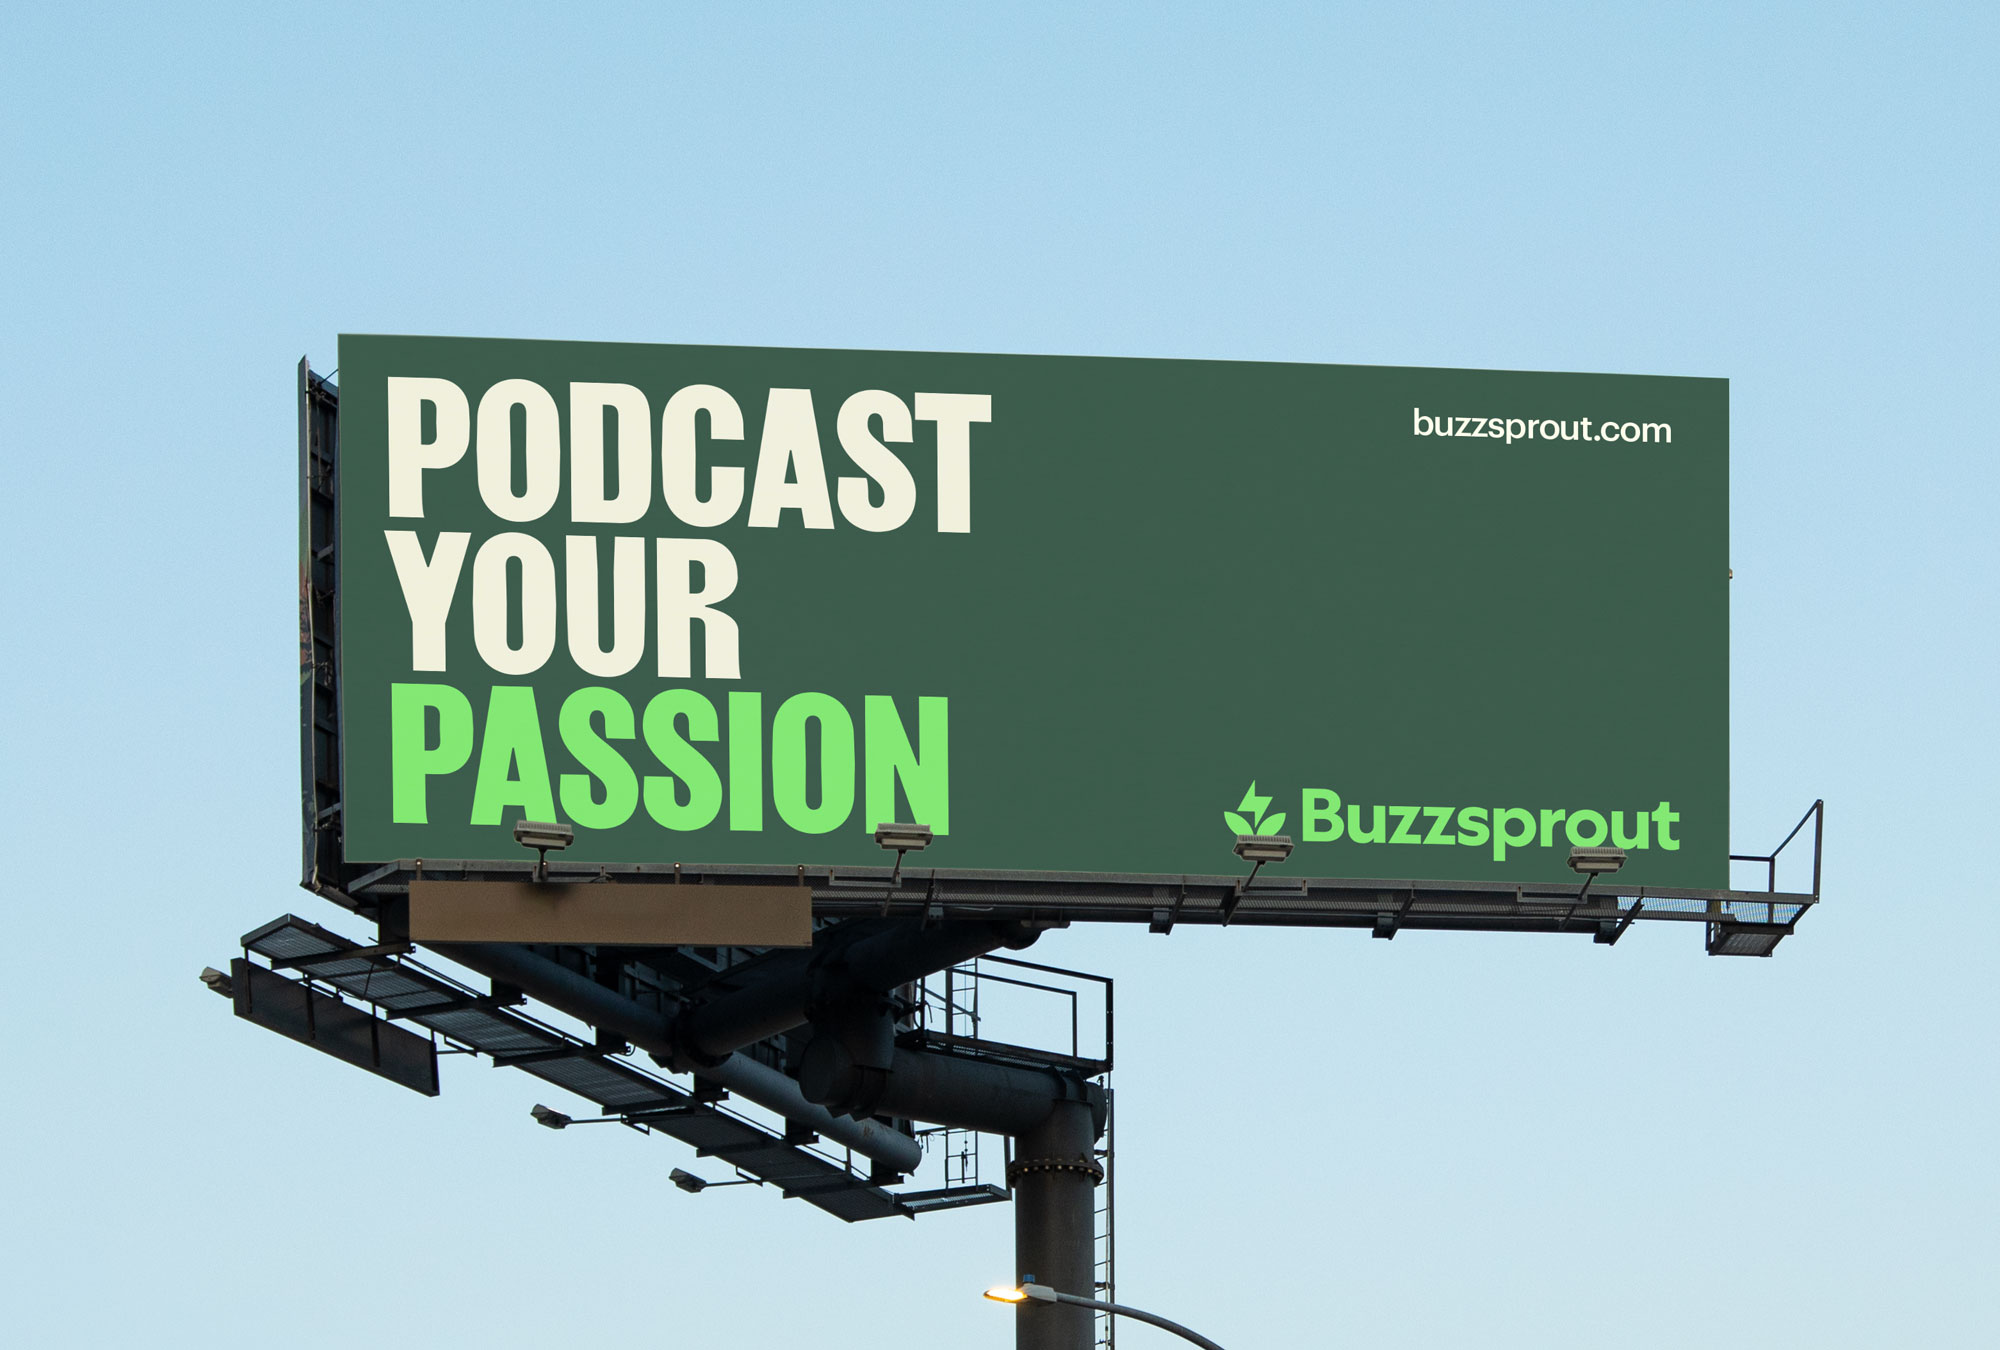 buzzsprout_billboard